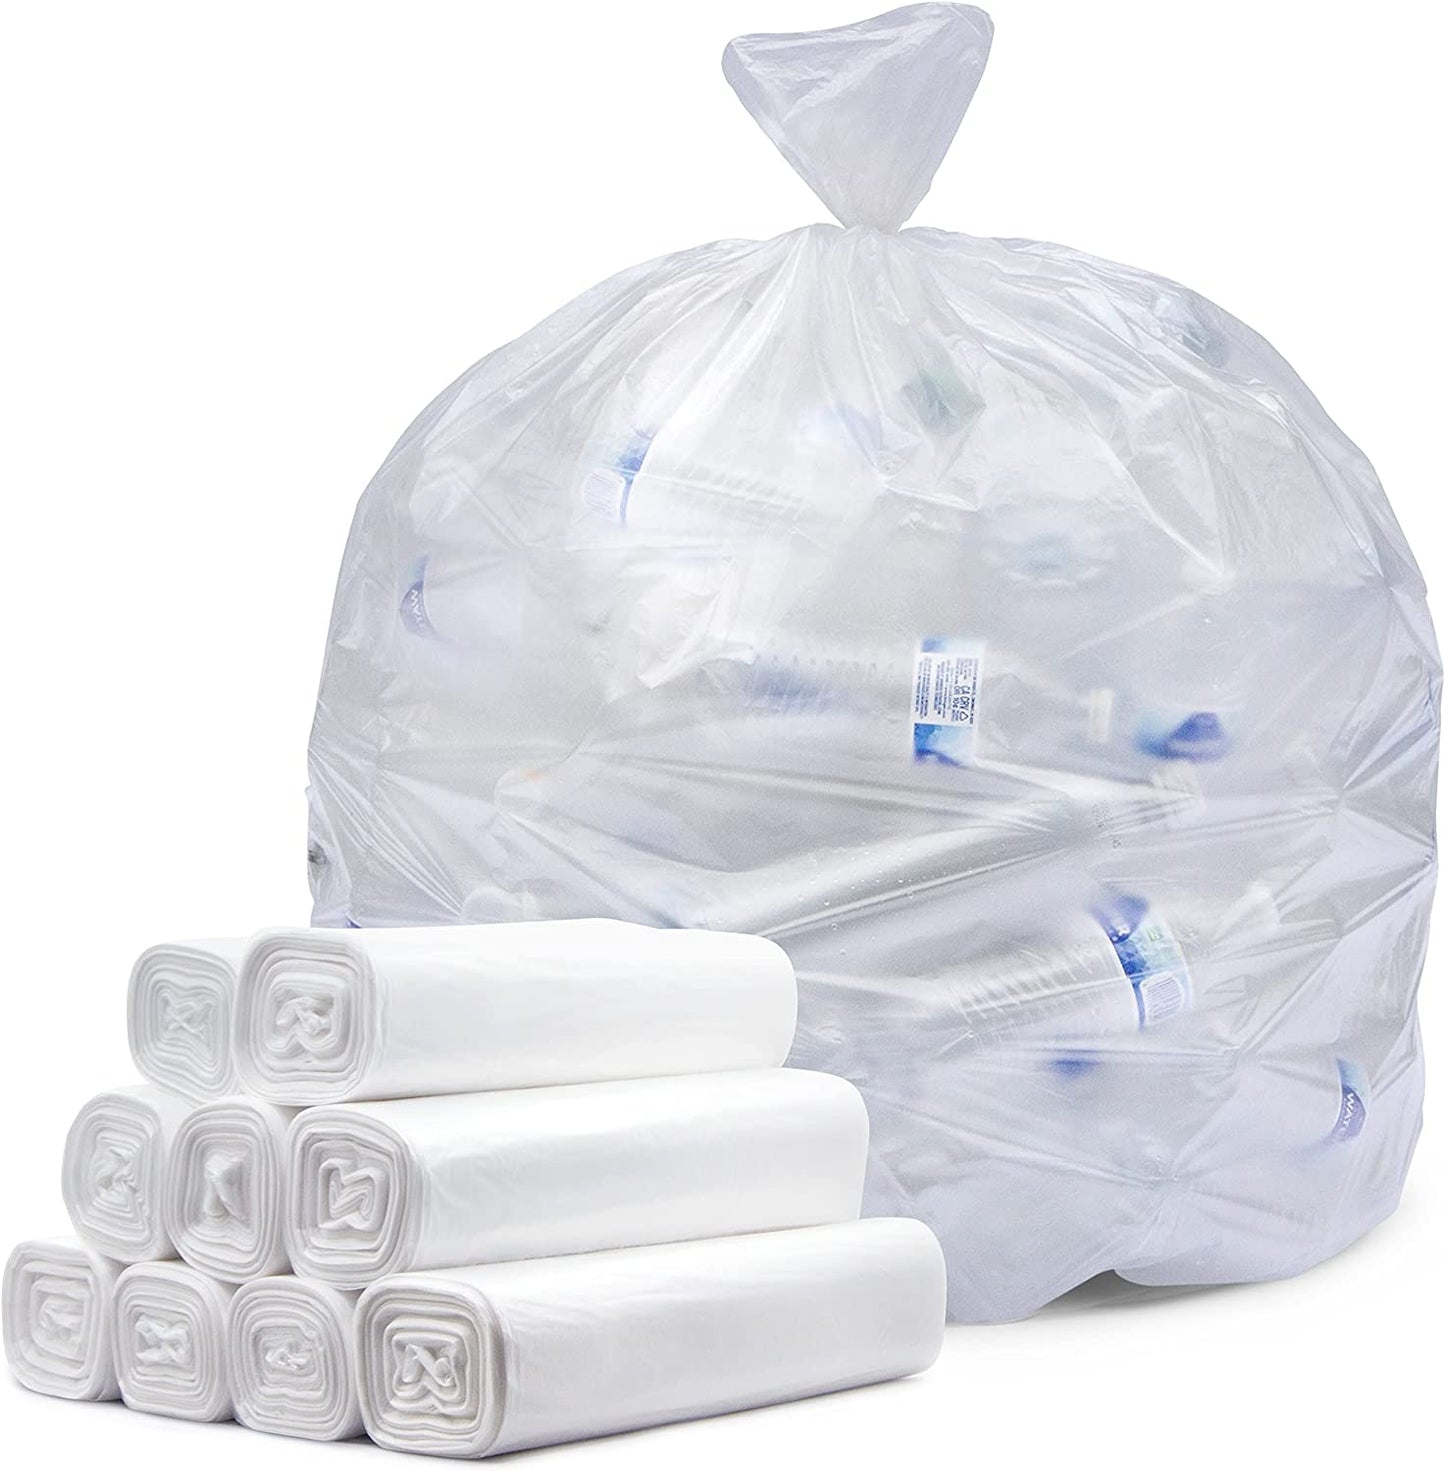 36L Thinkpac White Bin Liners Rubbish Bags 10micron (1,000 Bags)